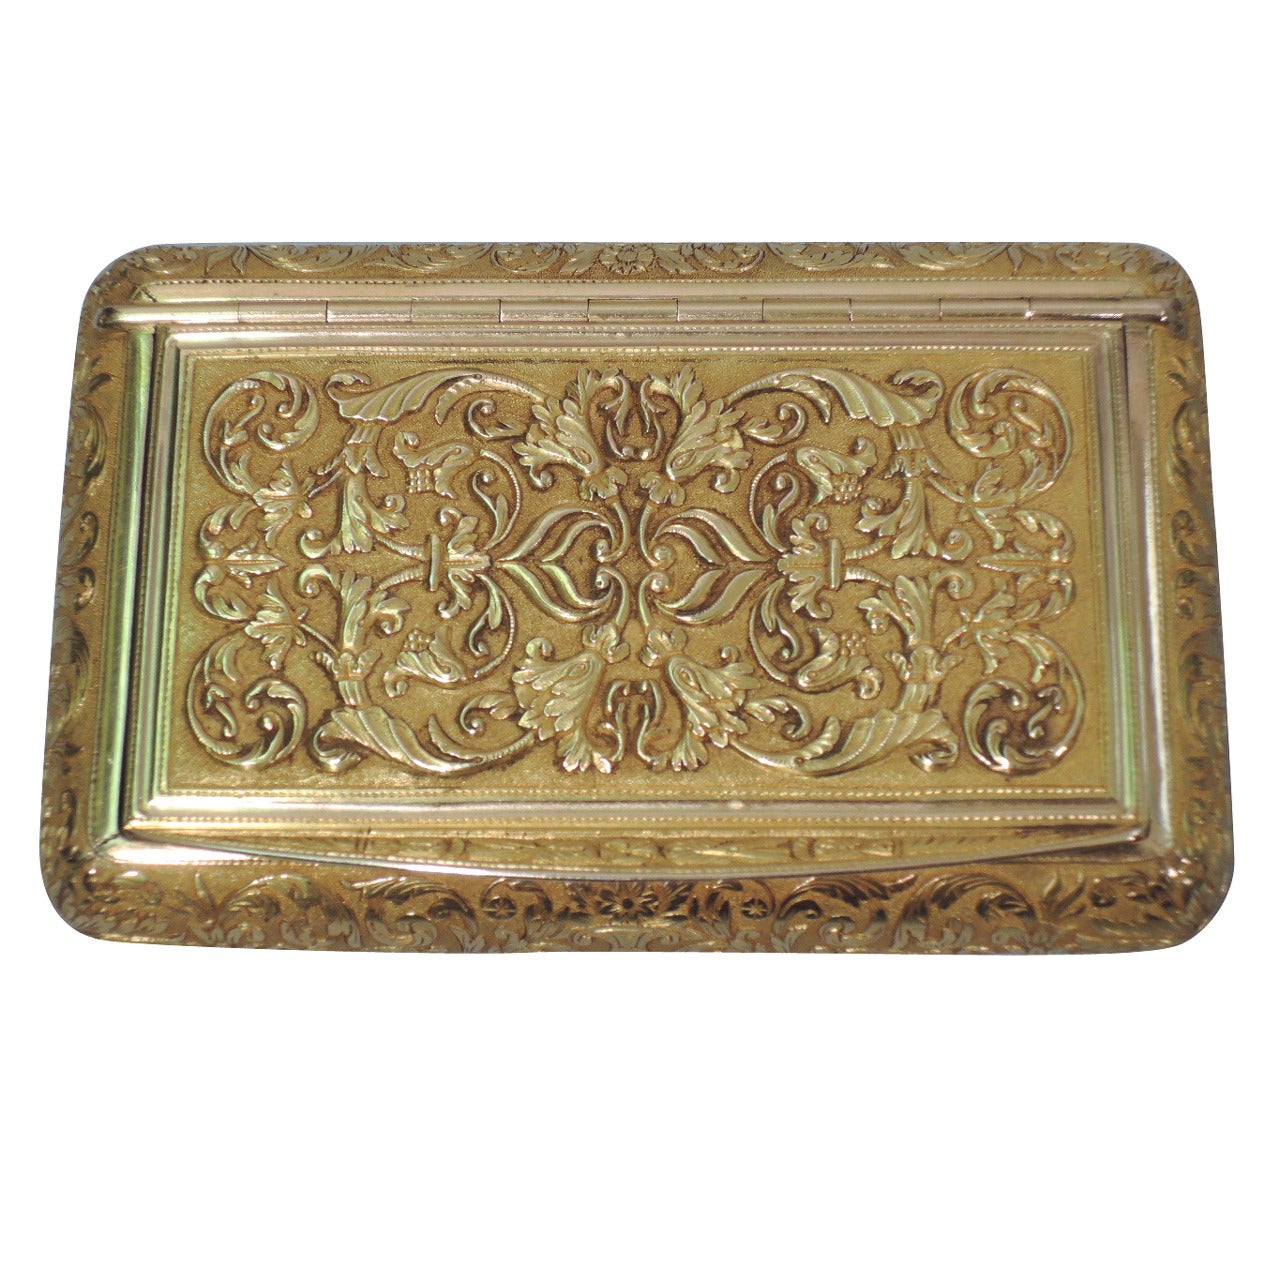 Antique European Gold Snuffbox with Superb Ornament